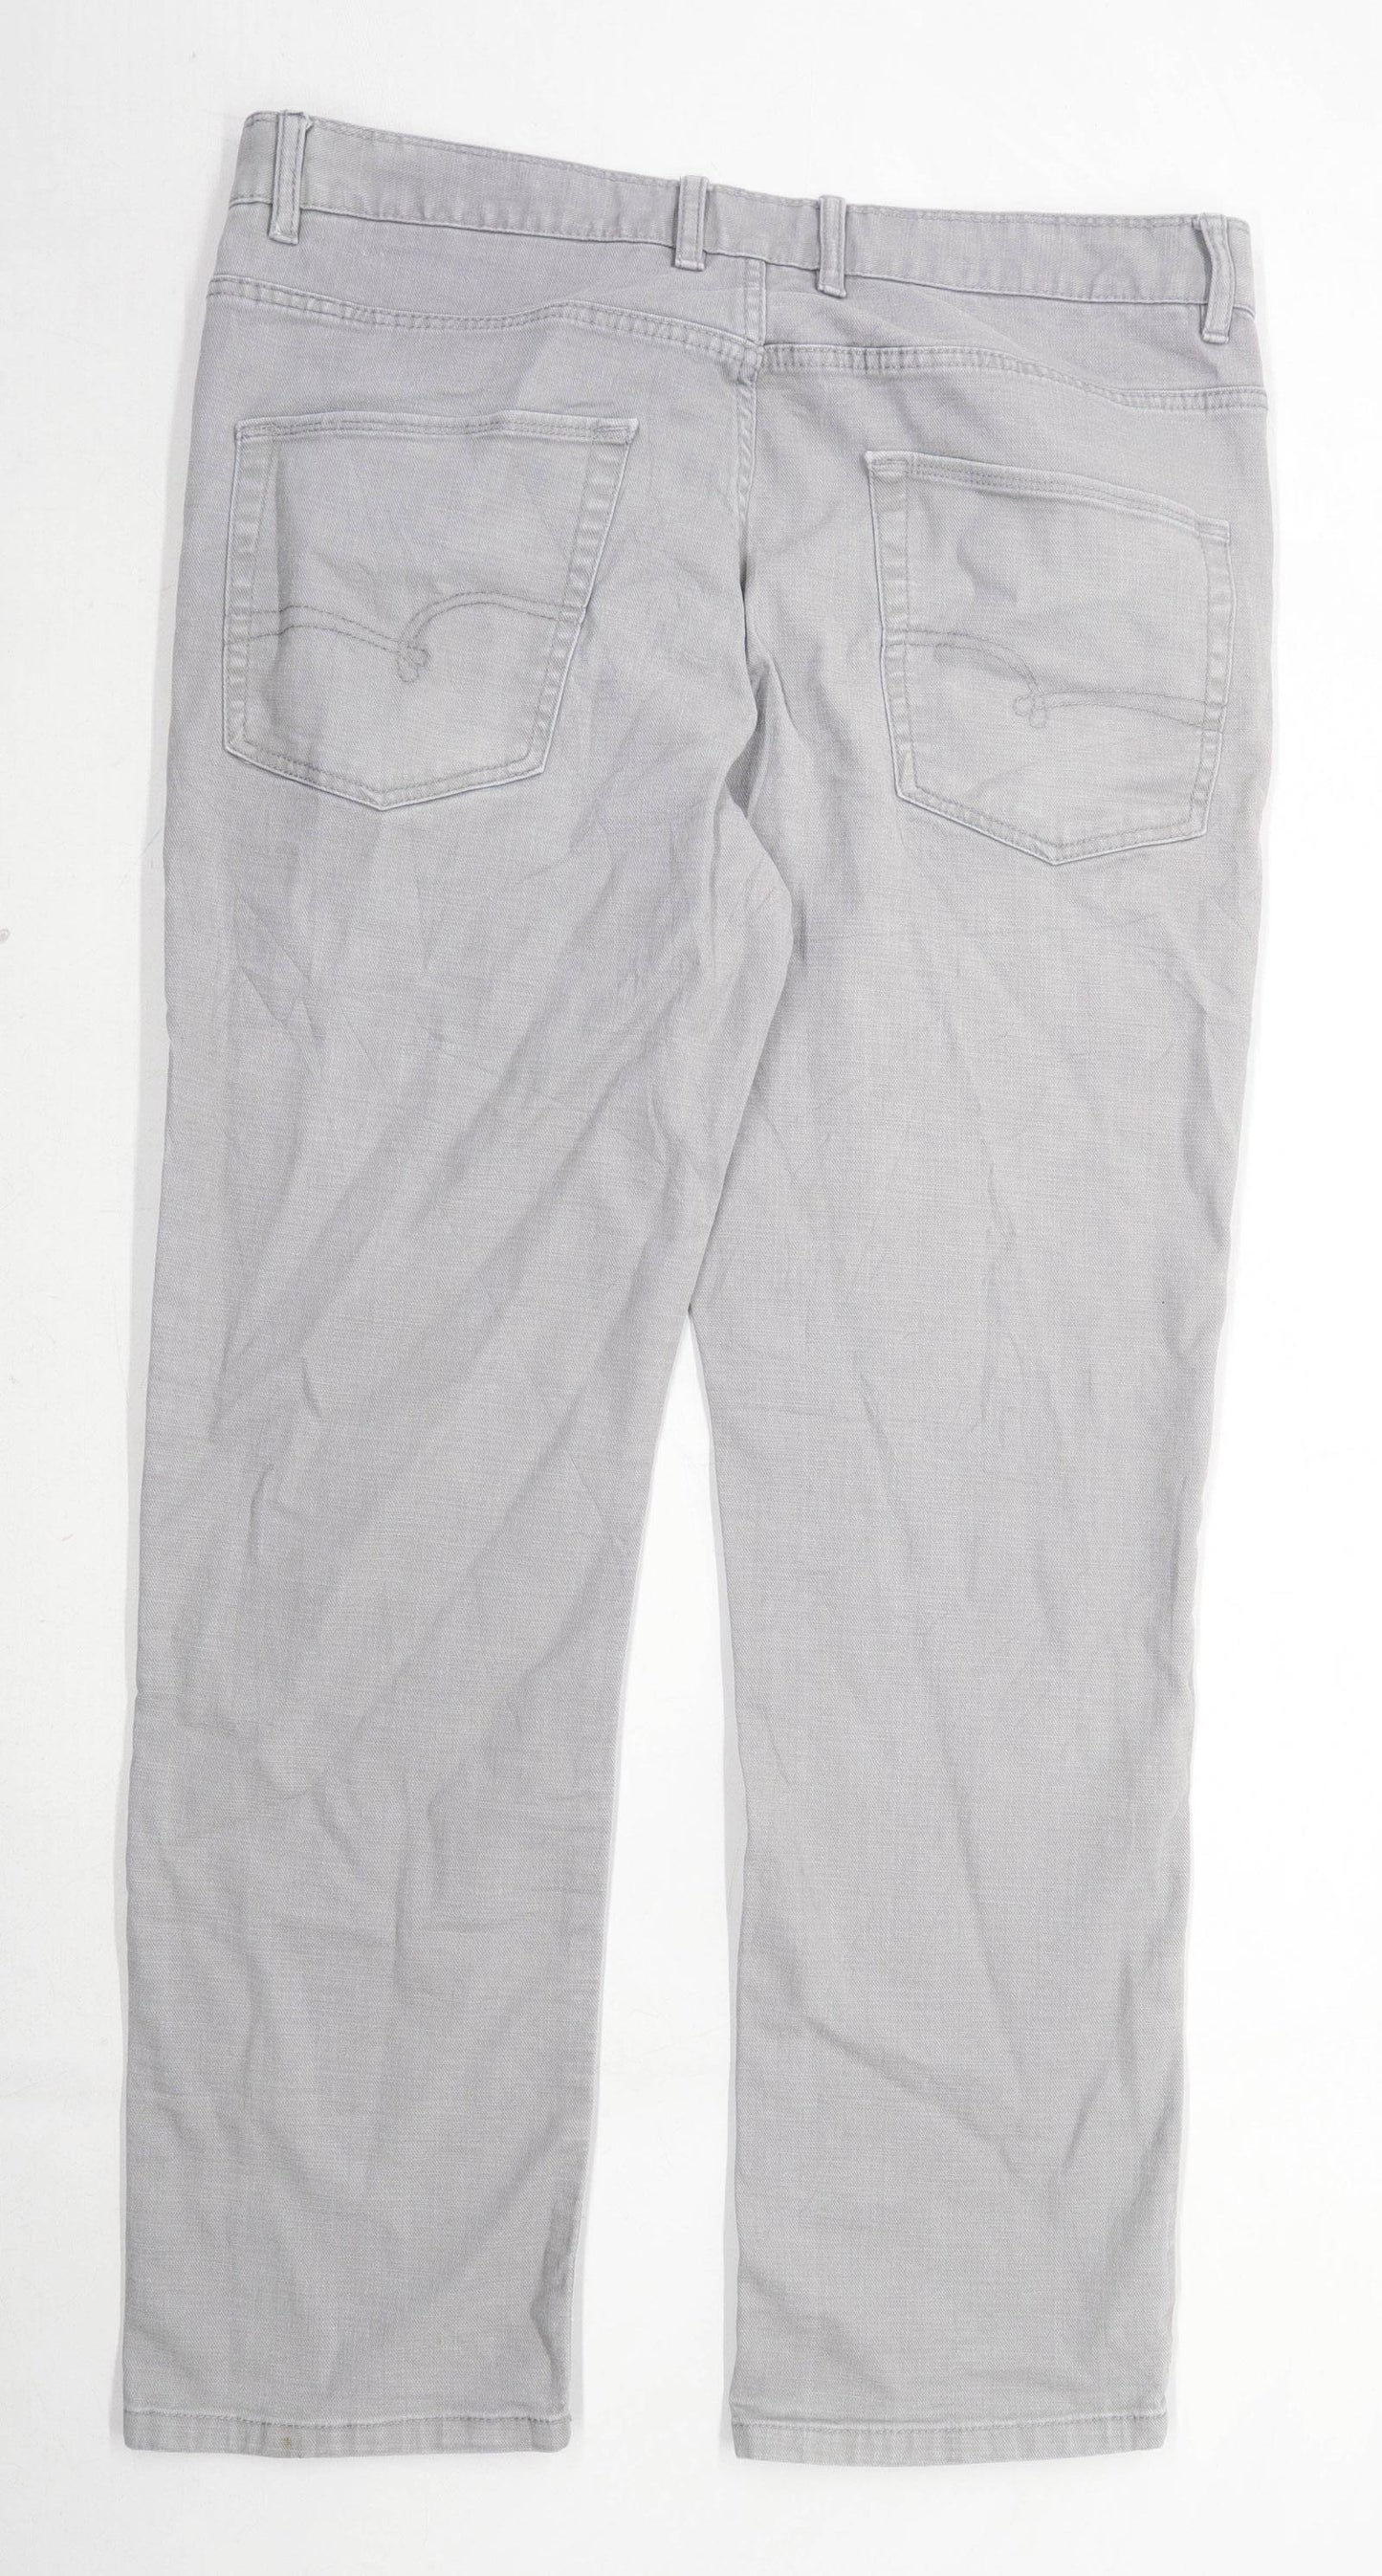 TU Mens Grey Denim Jeans Size W36/L30